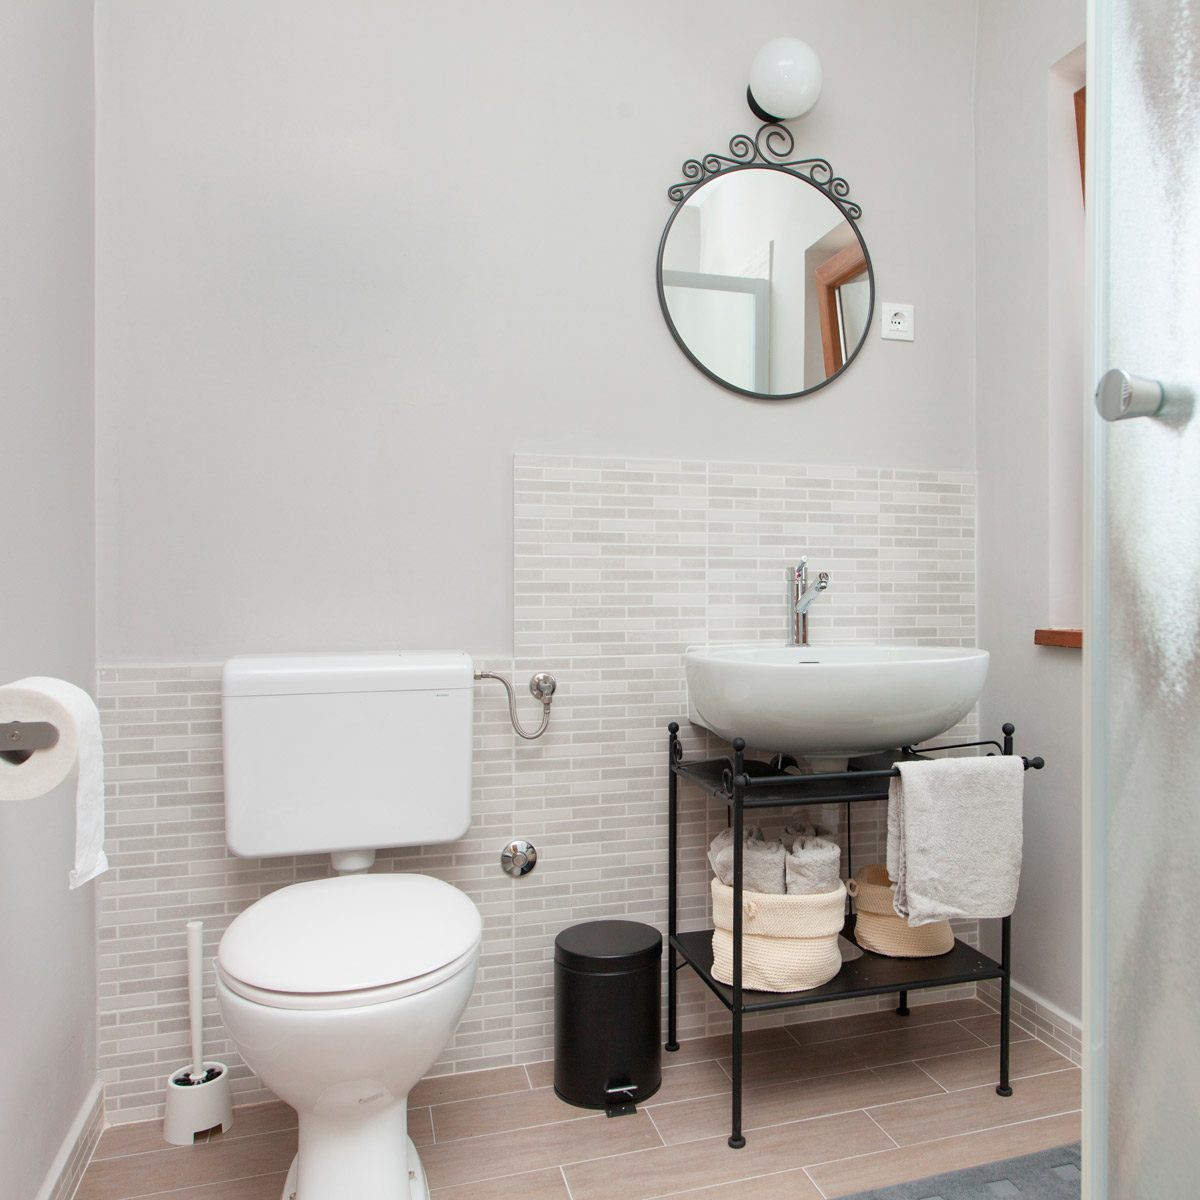 Bathroom Designs Small
 10 Small Bathroom Ideas That Make a Big Impact